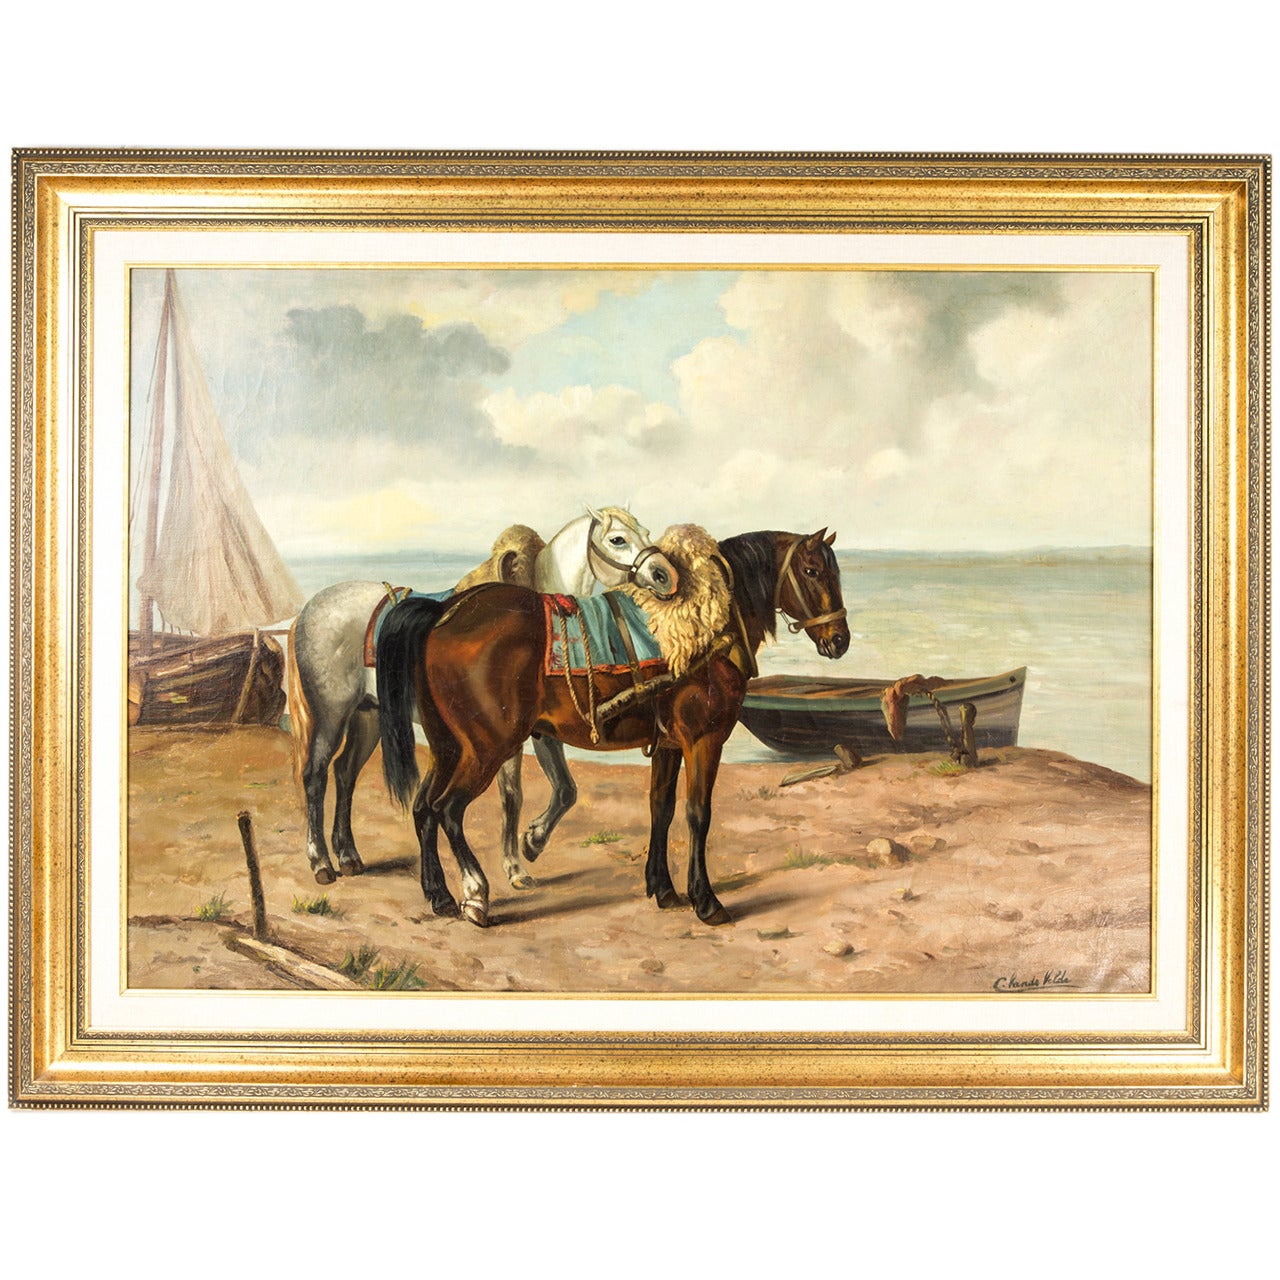 C. Van de Velde Horse Painting Oil on Canvas, circa 1908